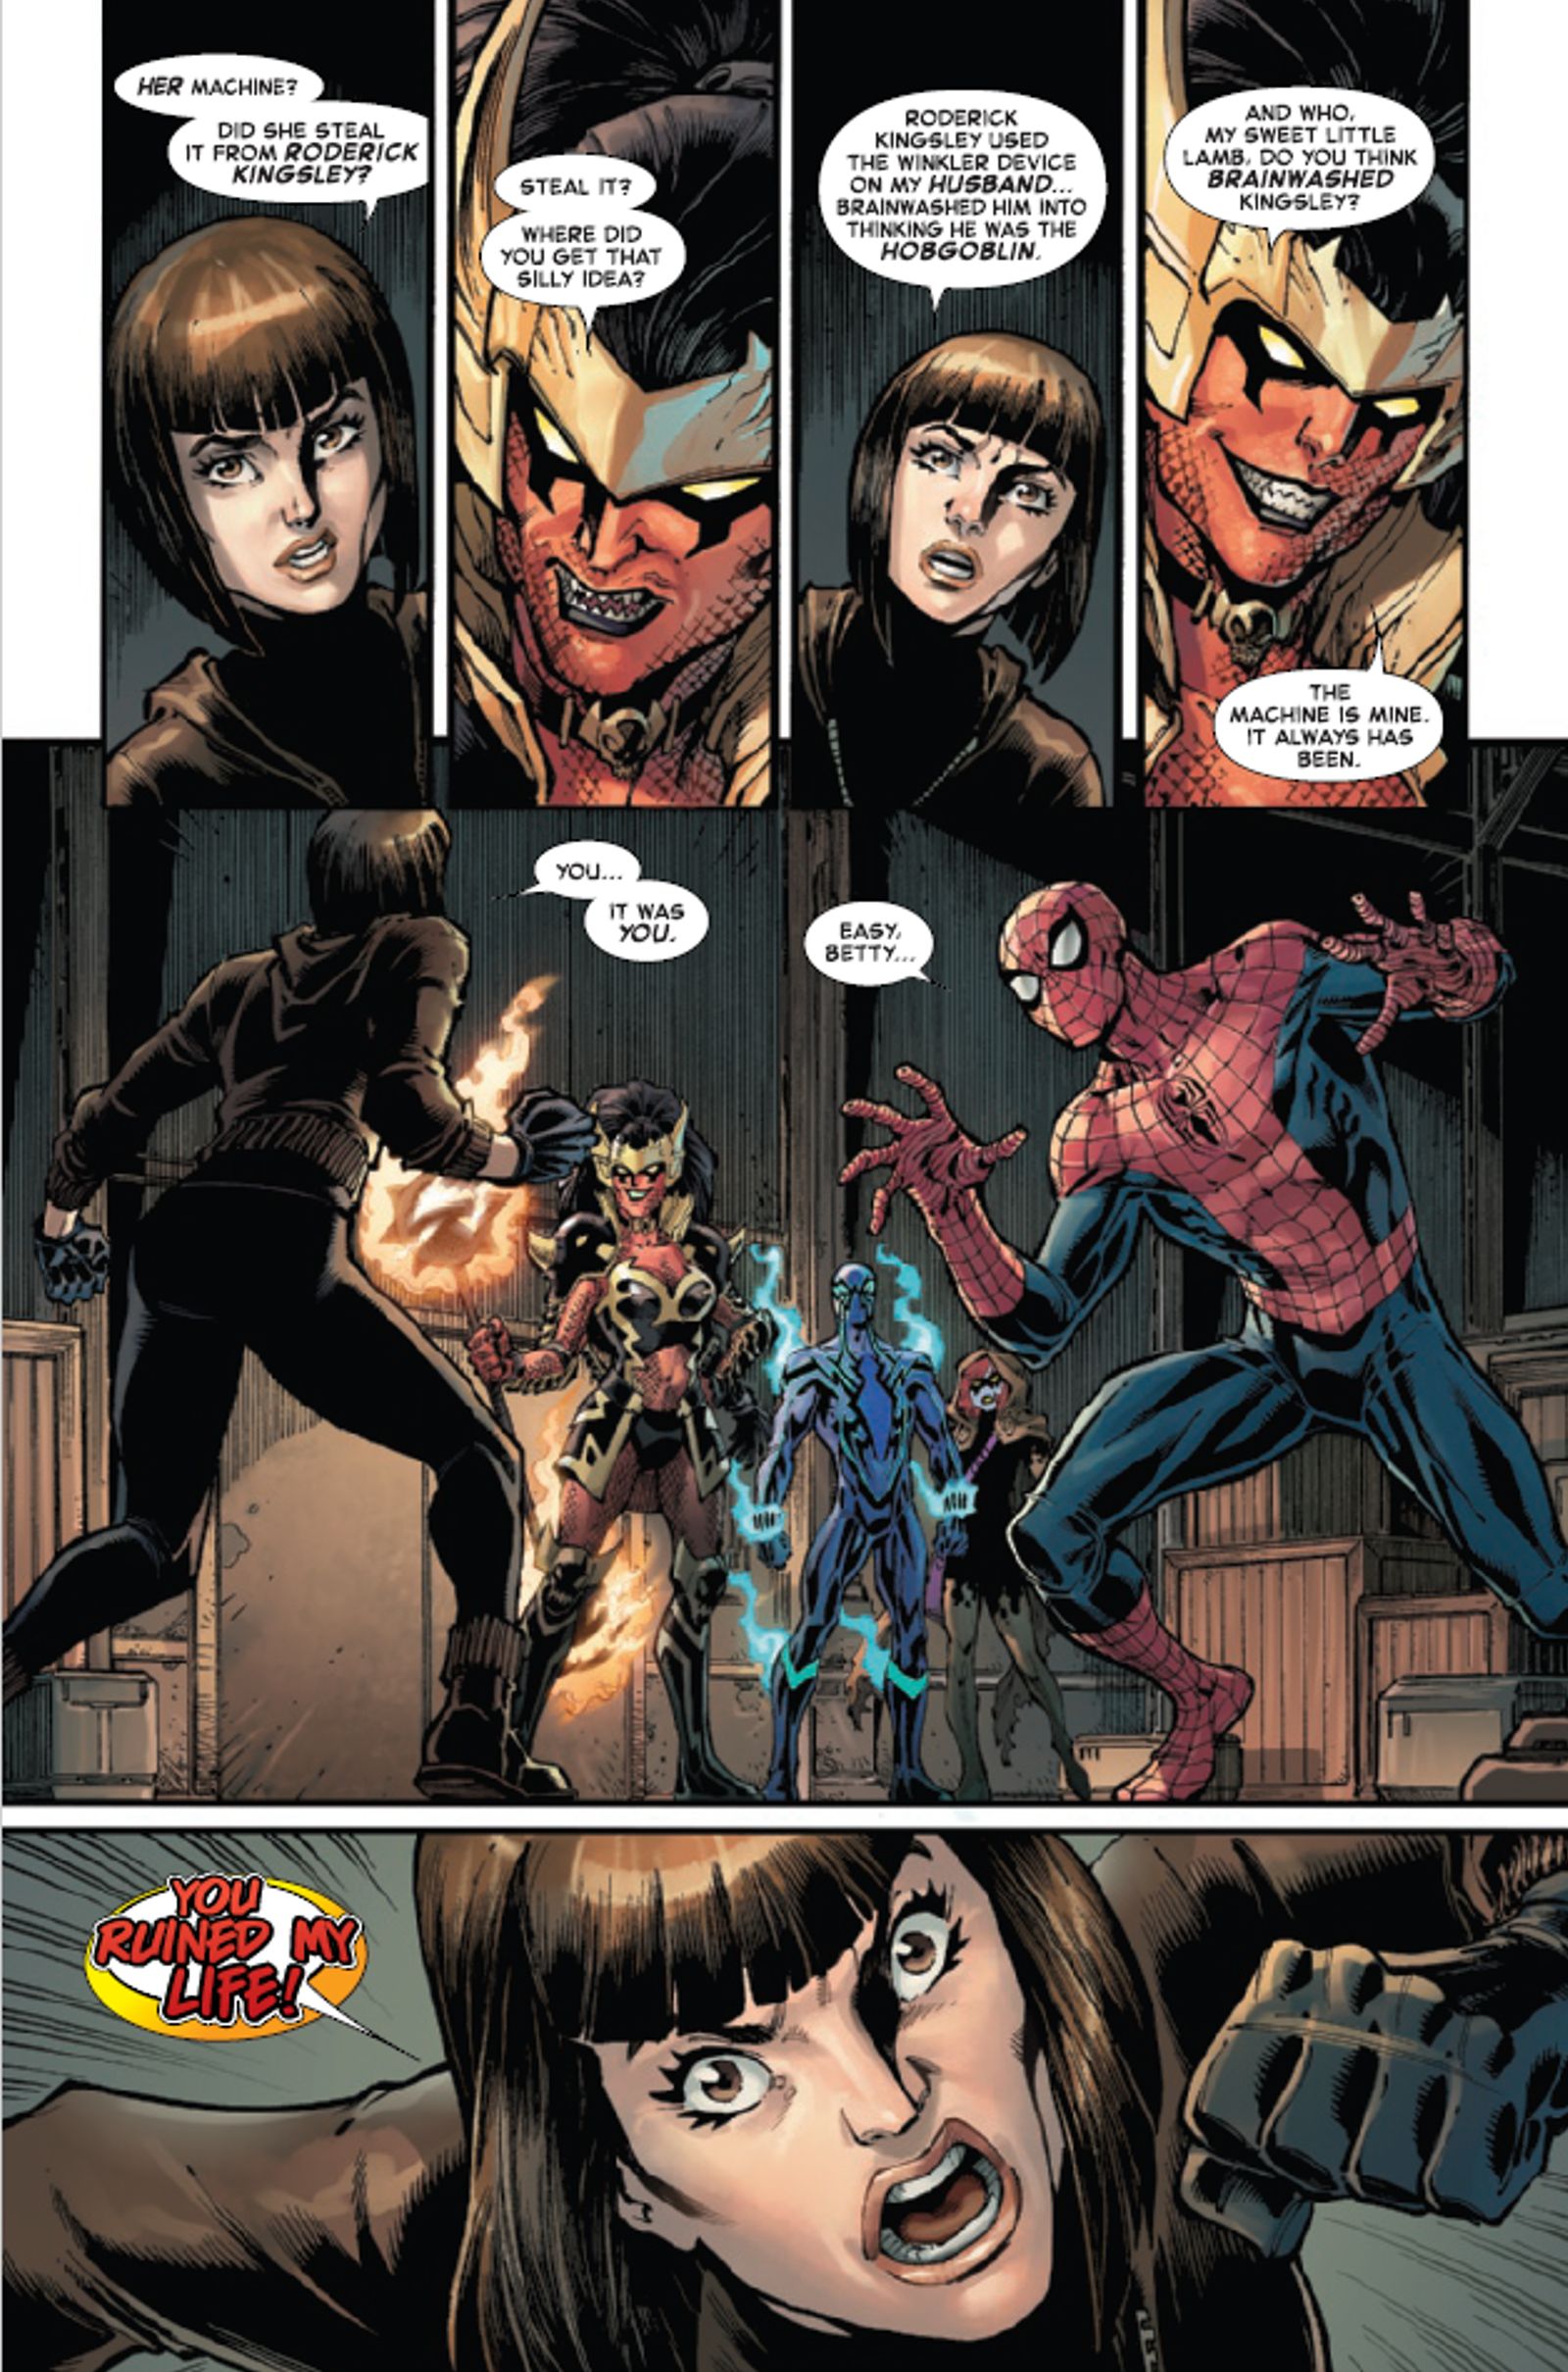 Marvel Reveals the Shocking Truth Behind Multiple Spider-Man Villains